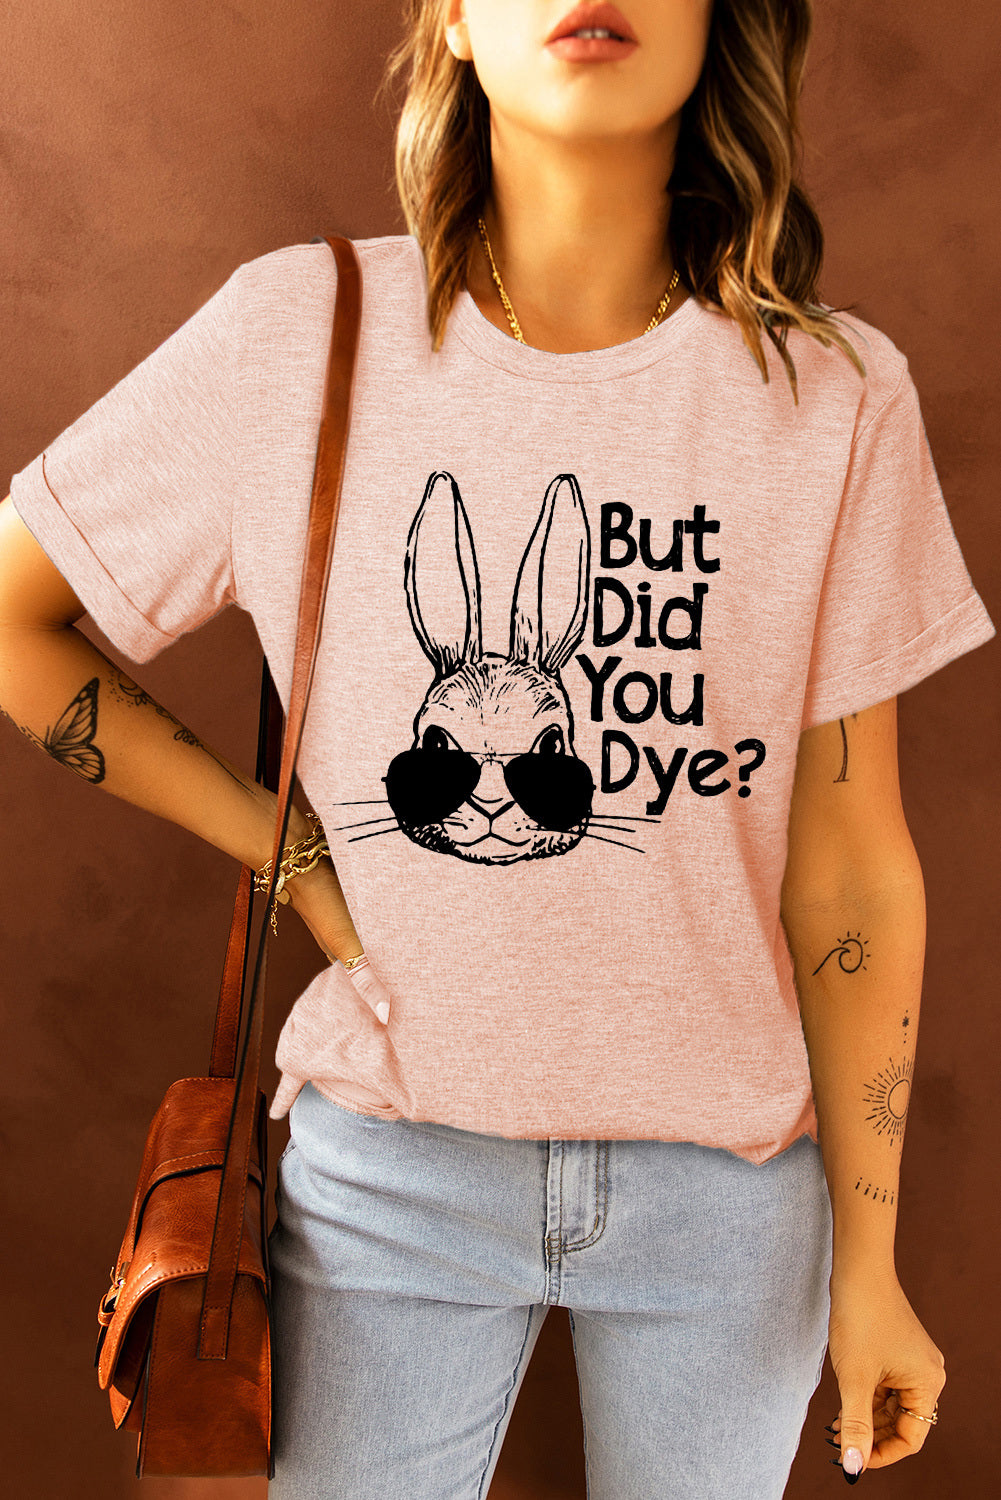 LC25214638-10-S, LC25214638-10-M, LC25214638-10-L, LC25214638-10-XL, LC25214638-10-2XL, Pink Easter Day Rabbit Print But Did You Dye Bunny Print Short Sleeve T-shirt for Women